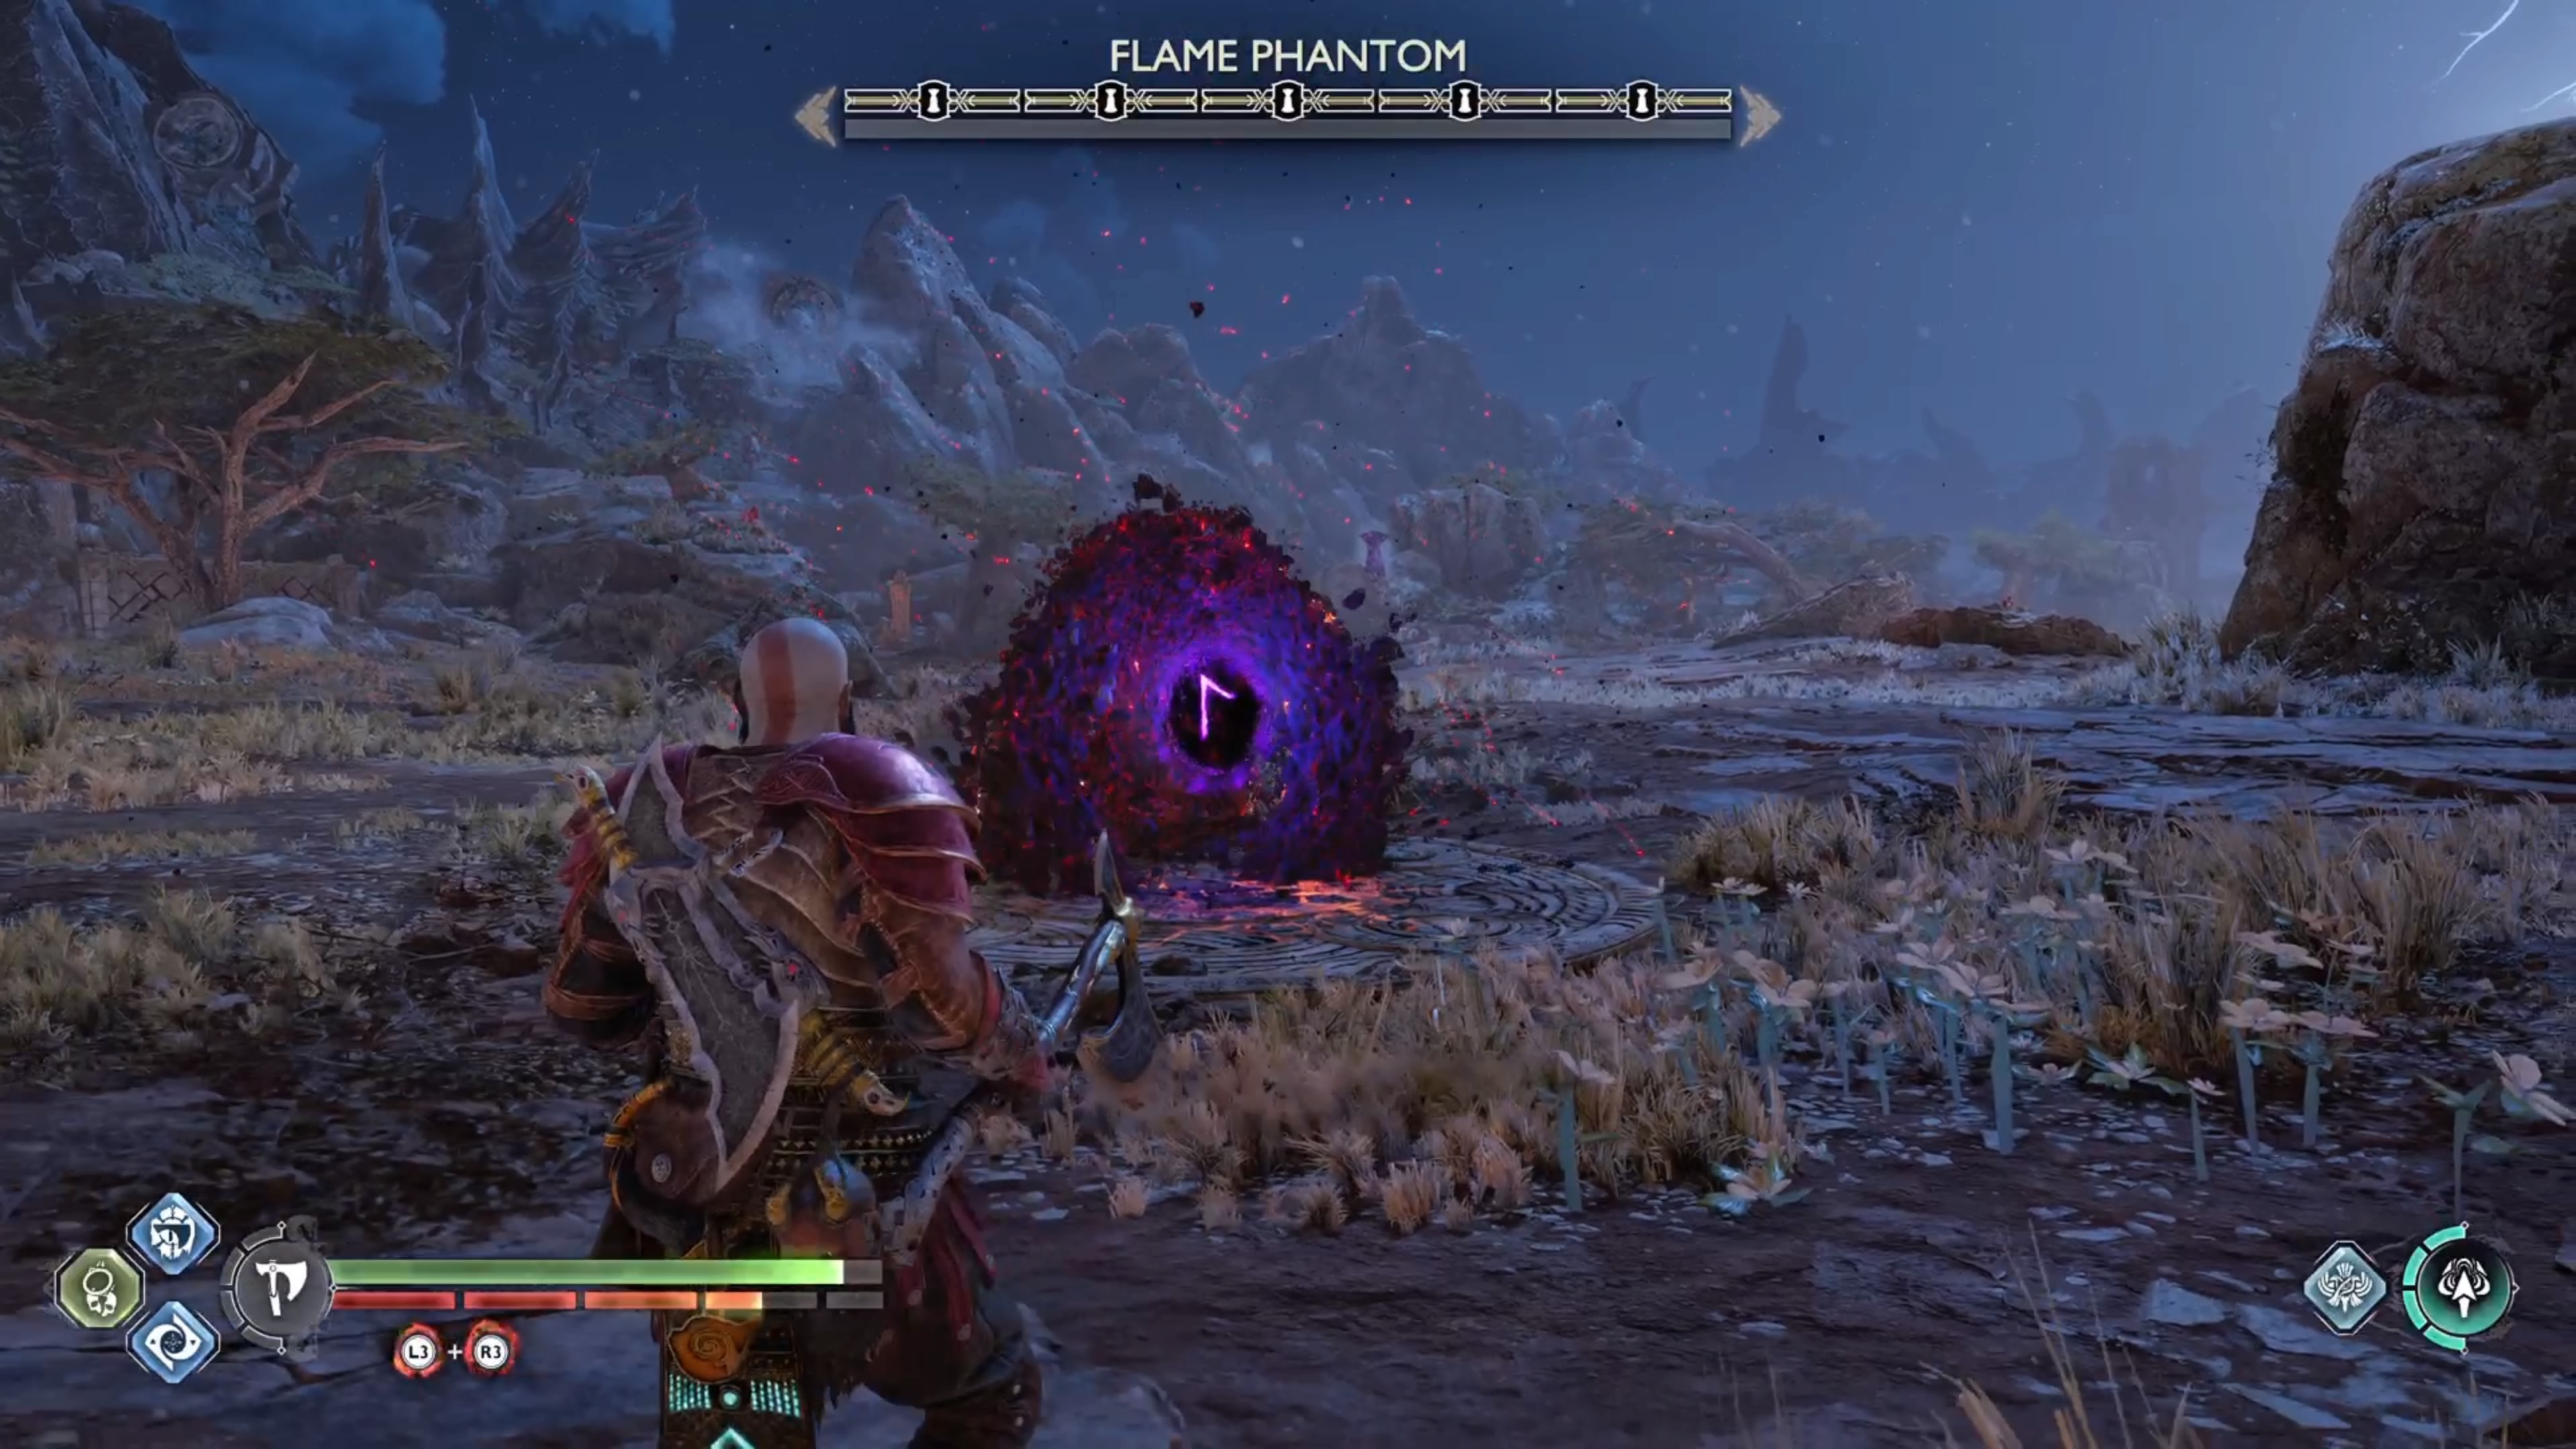 The orb will be the Flame Phantom's weak spot